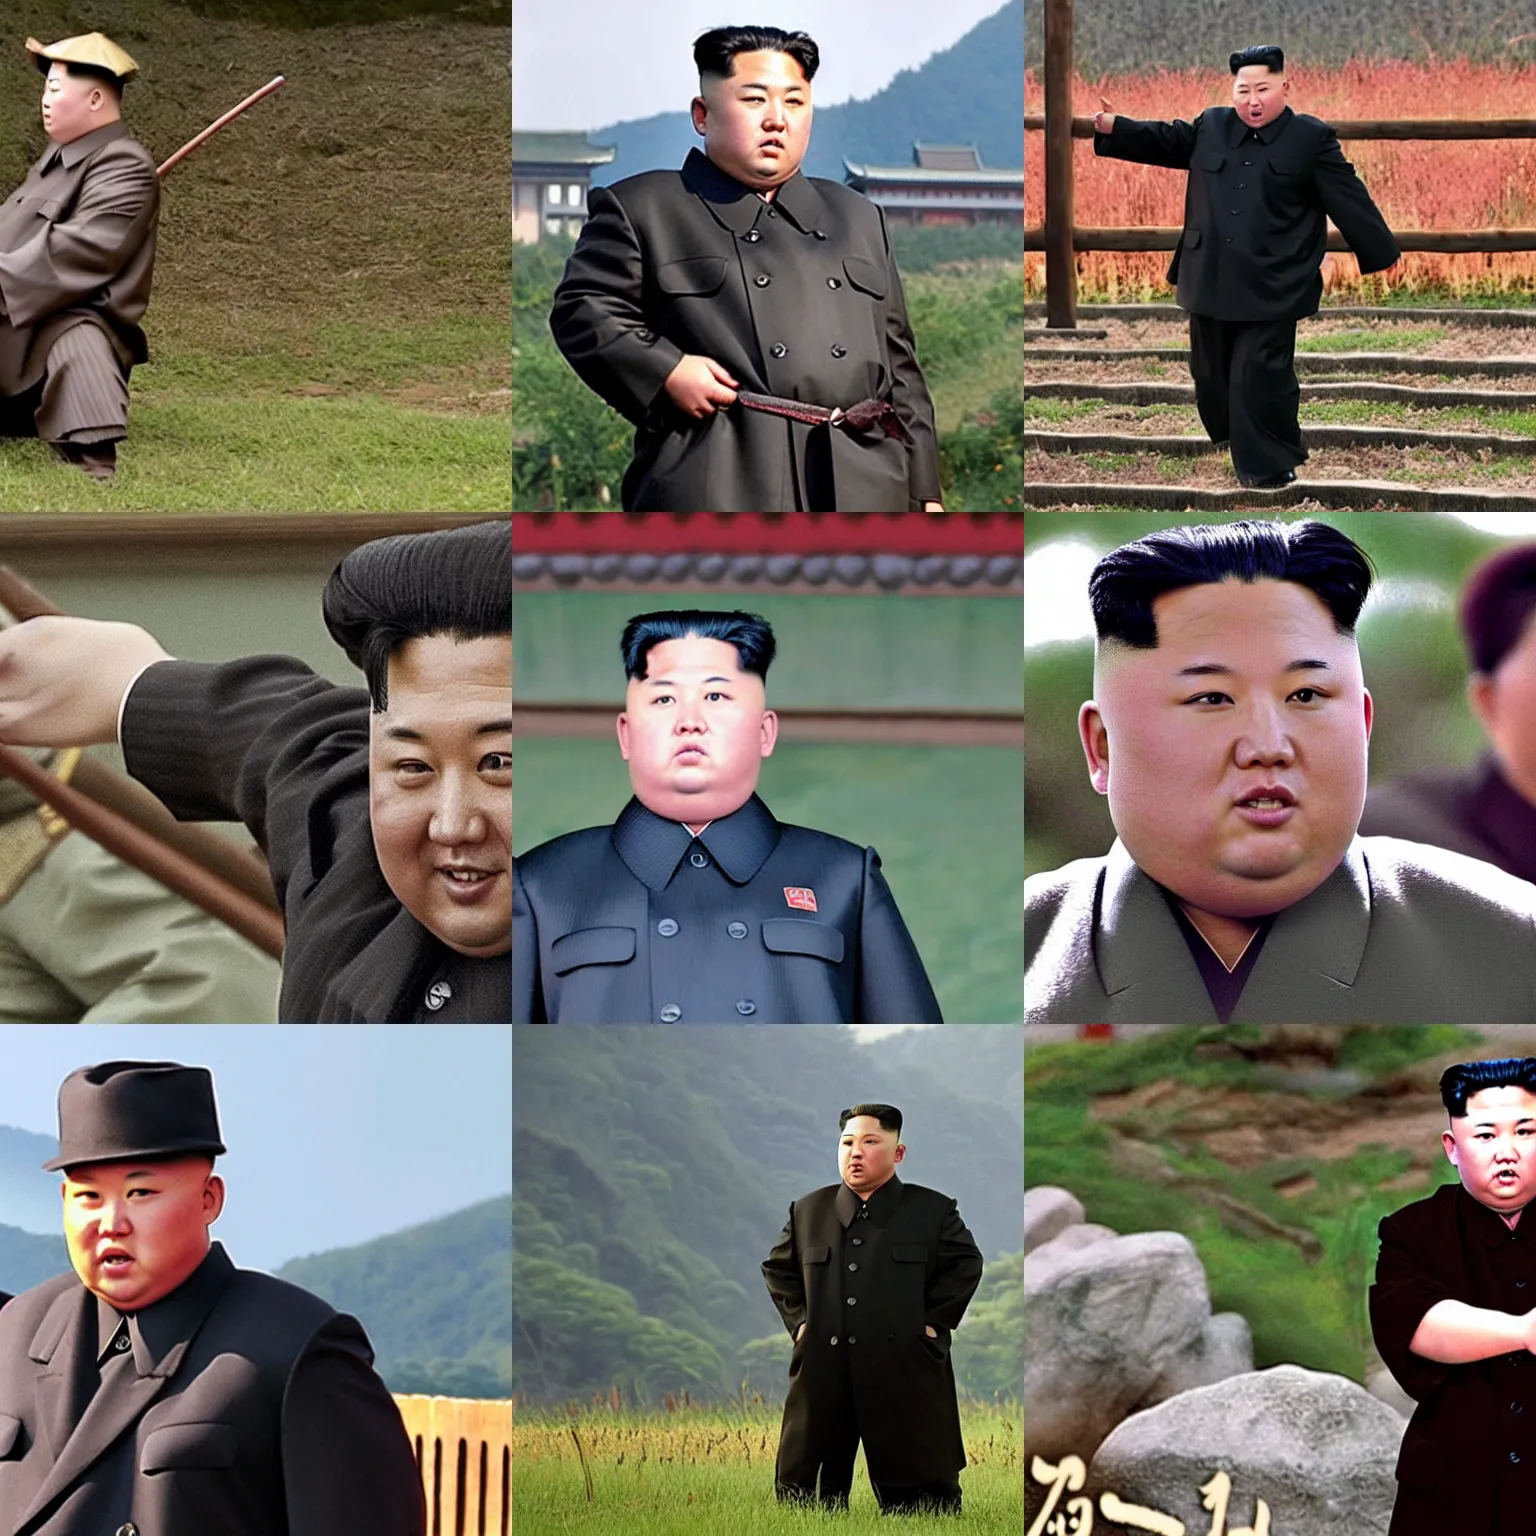 Prompt: Movie still of Kim Jong-Un in Crouching Tiger Hidden Dragon